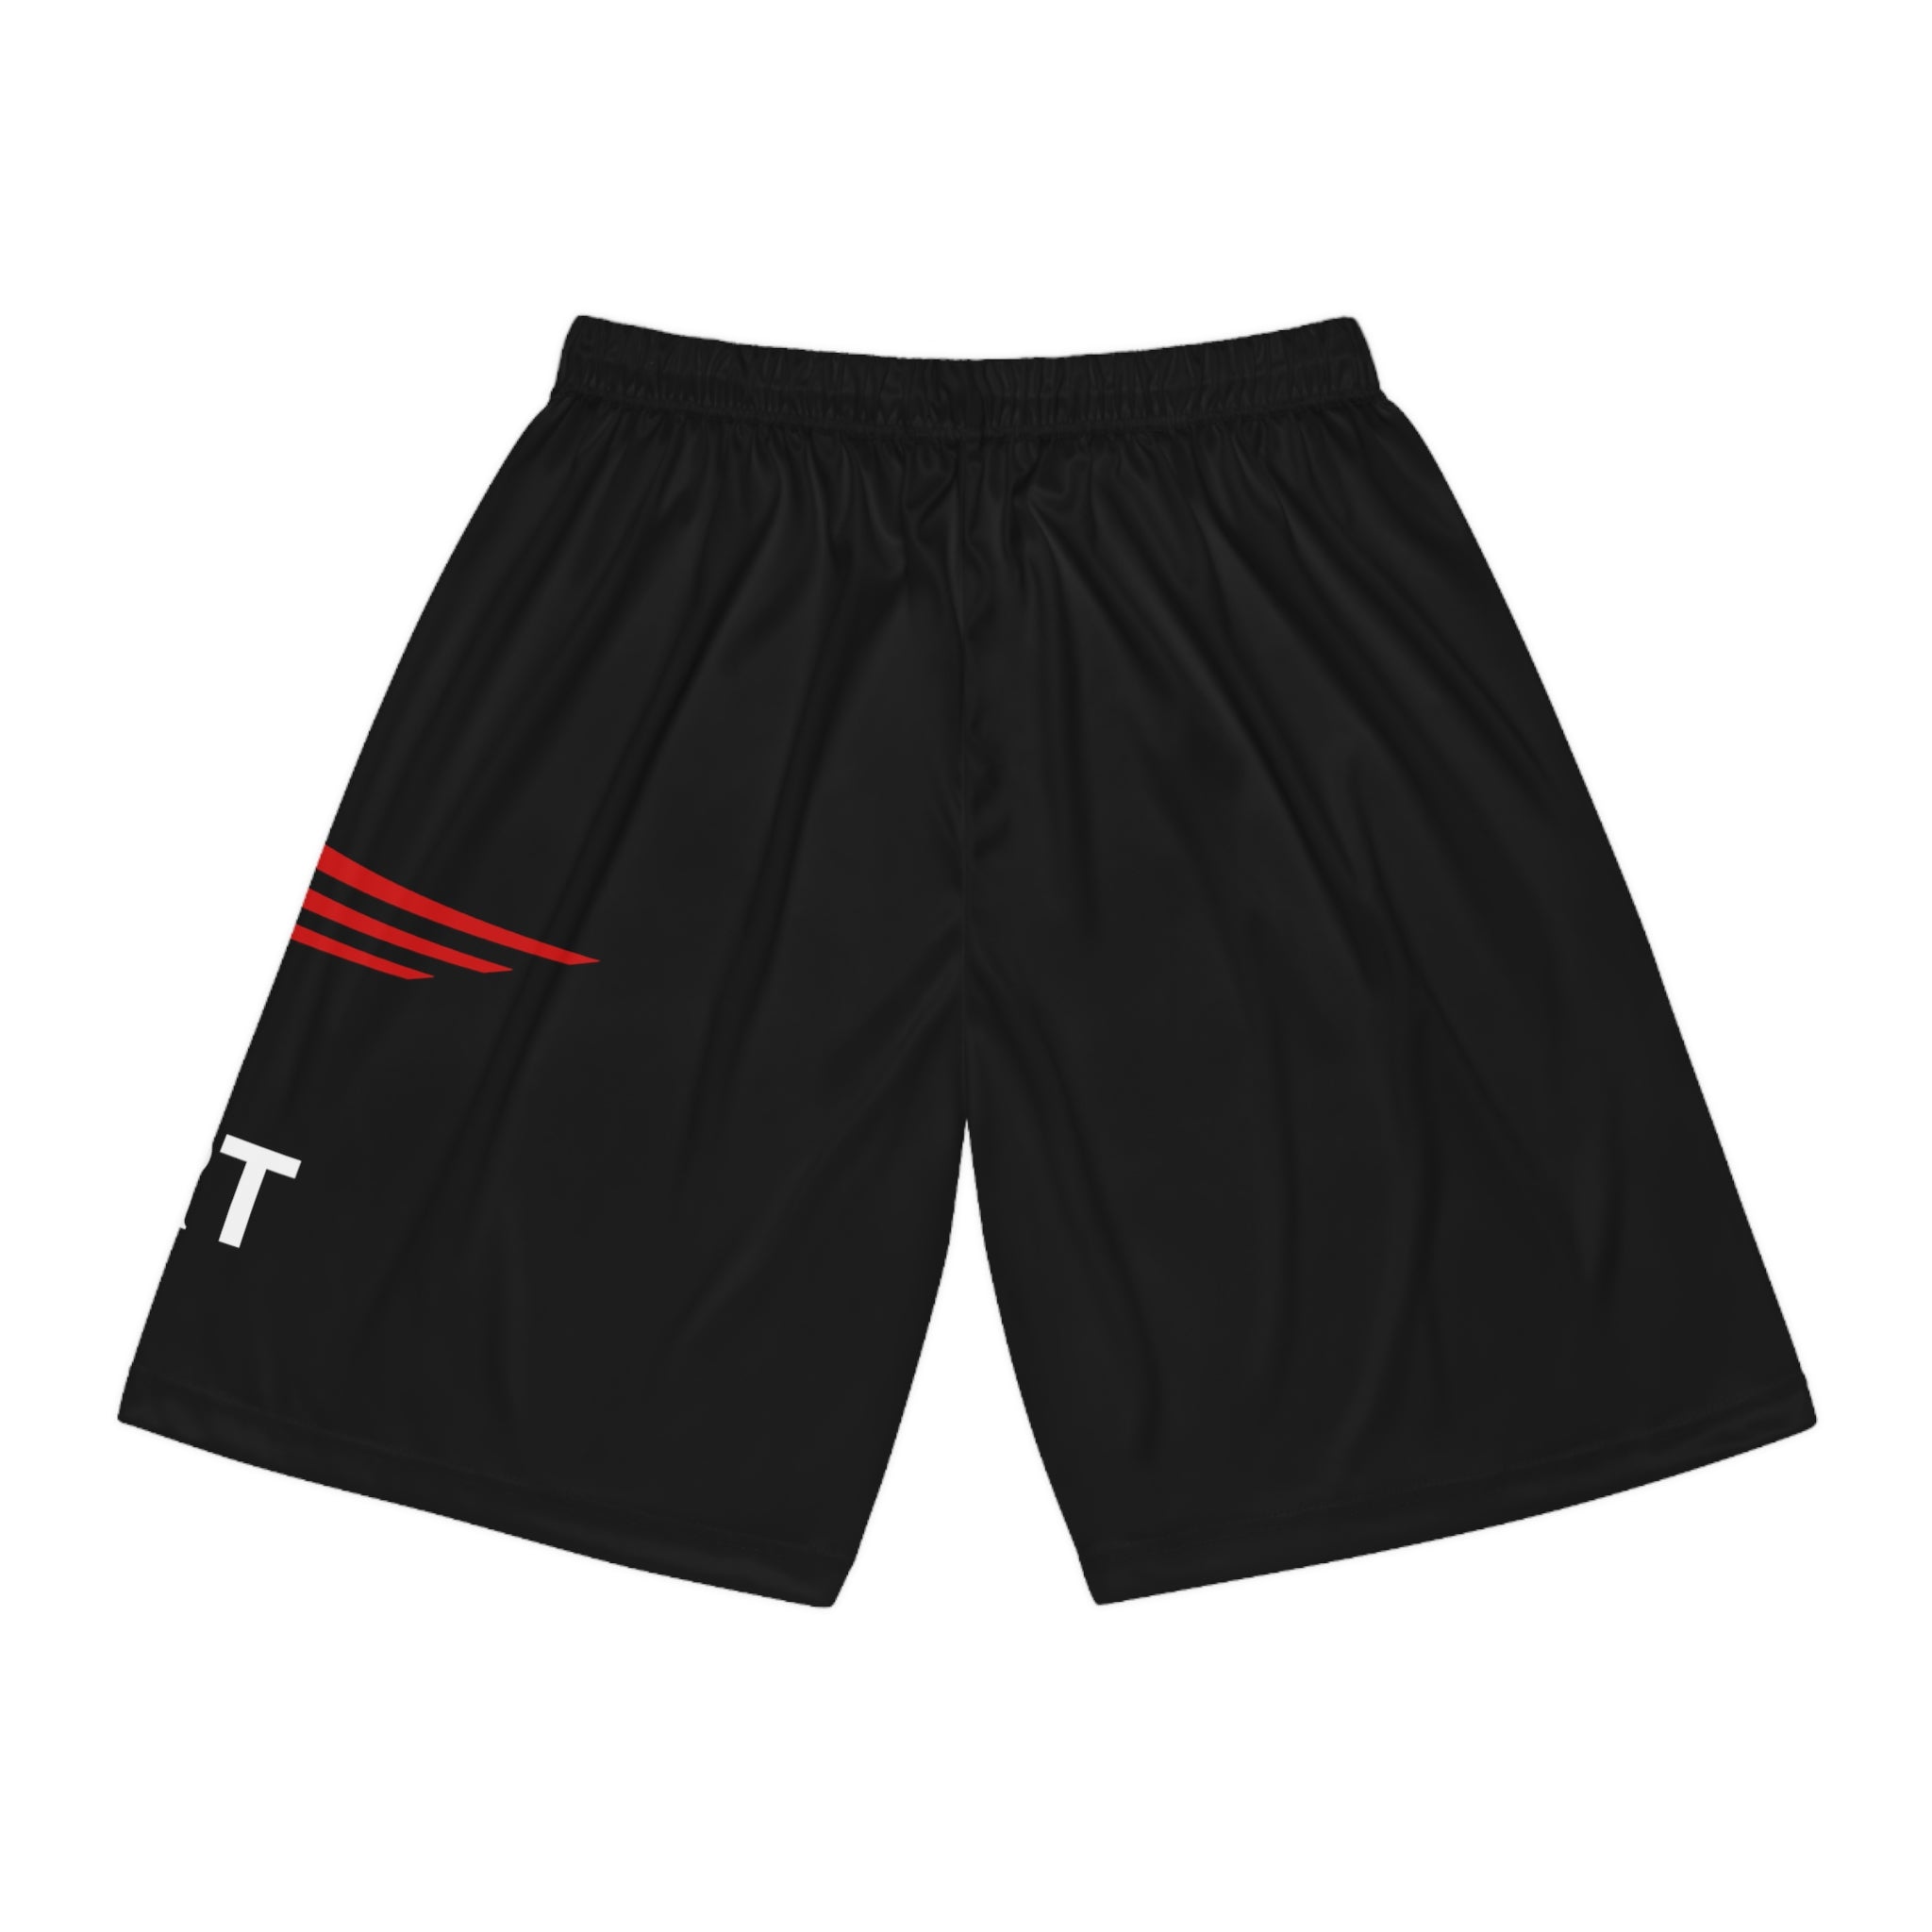 Product Image of RED SPORT LOGO Black Basketball Shorts #2